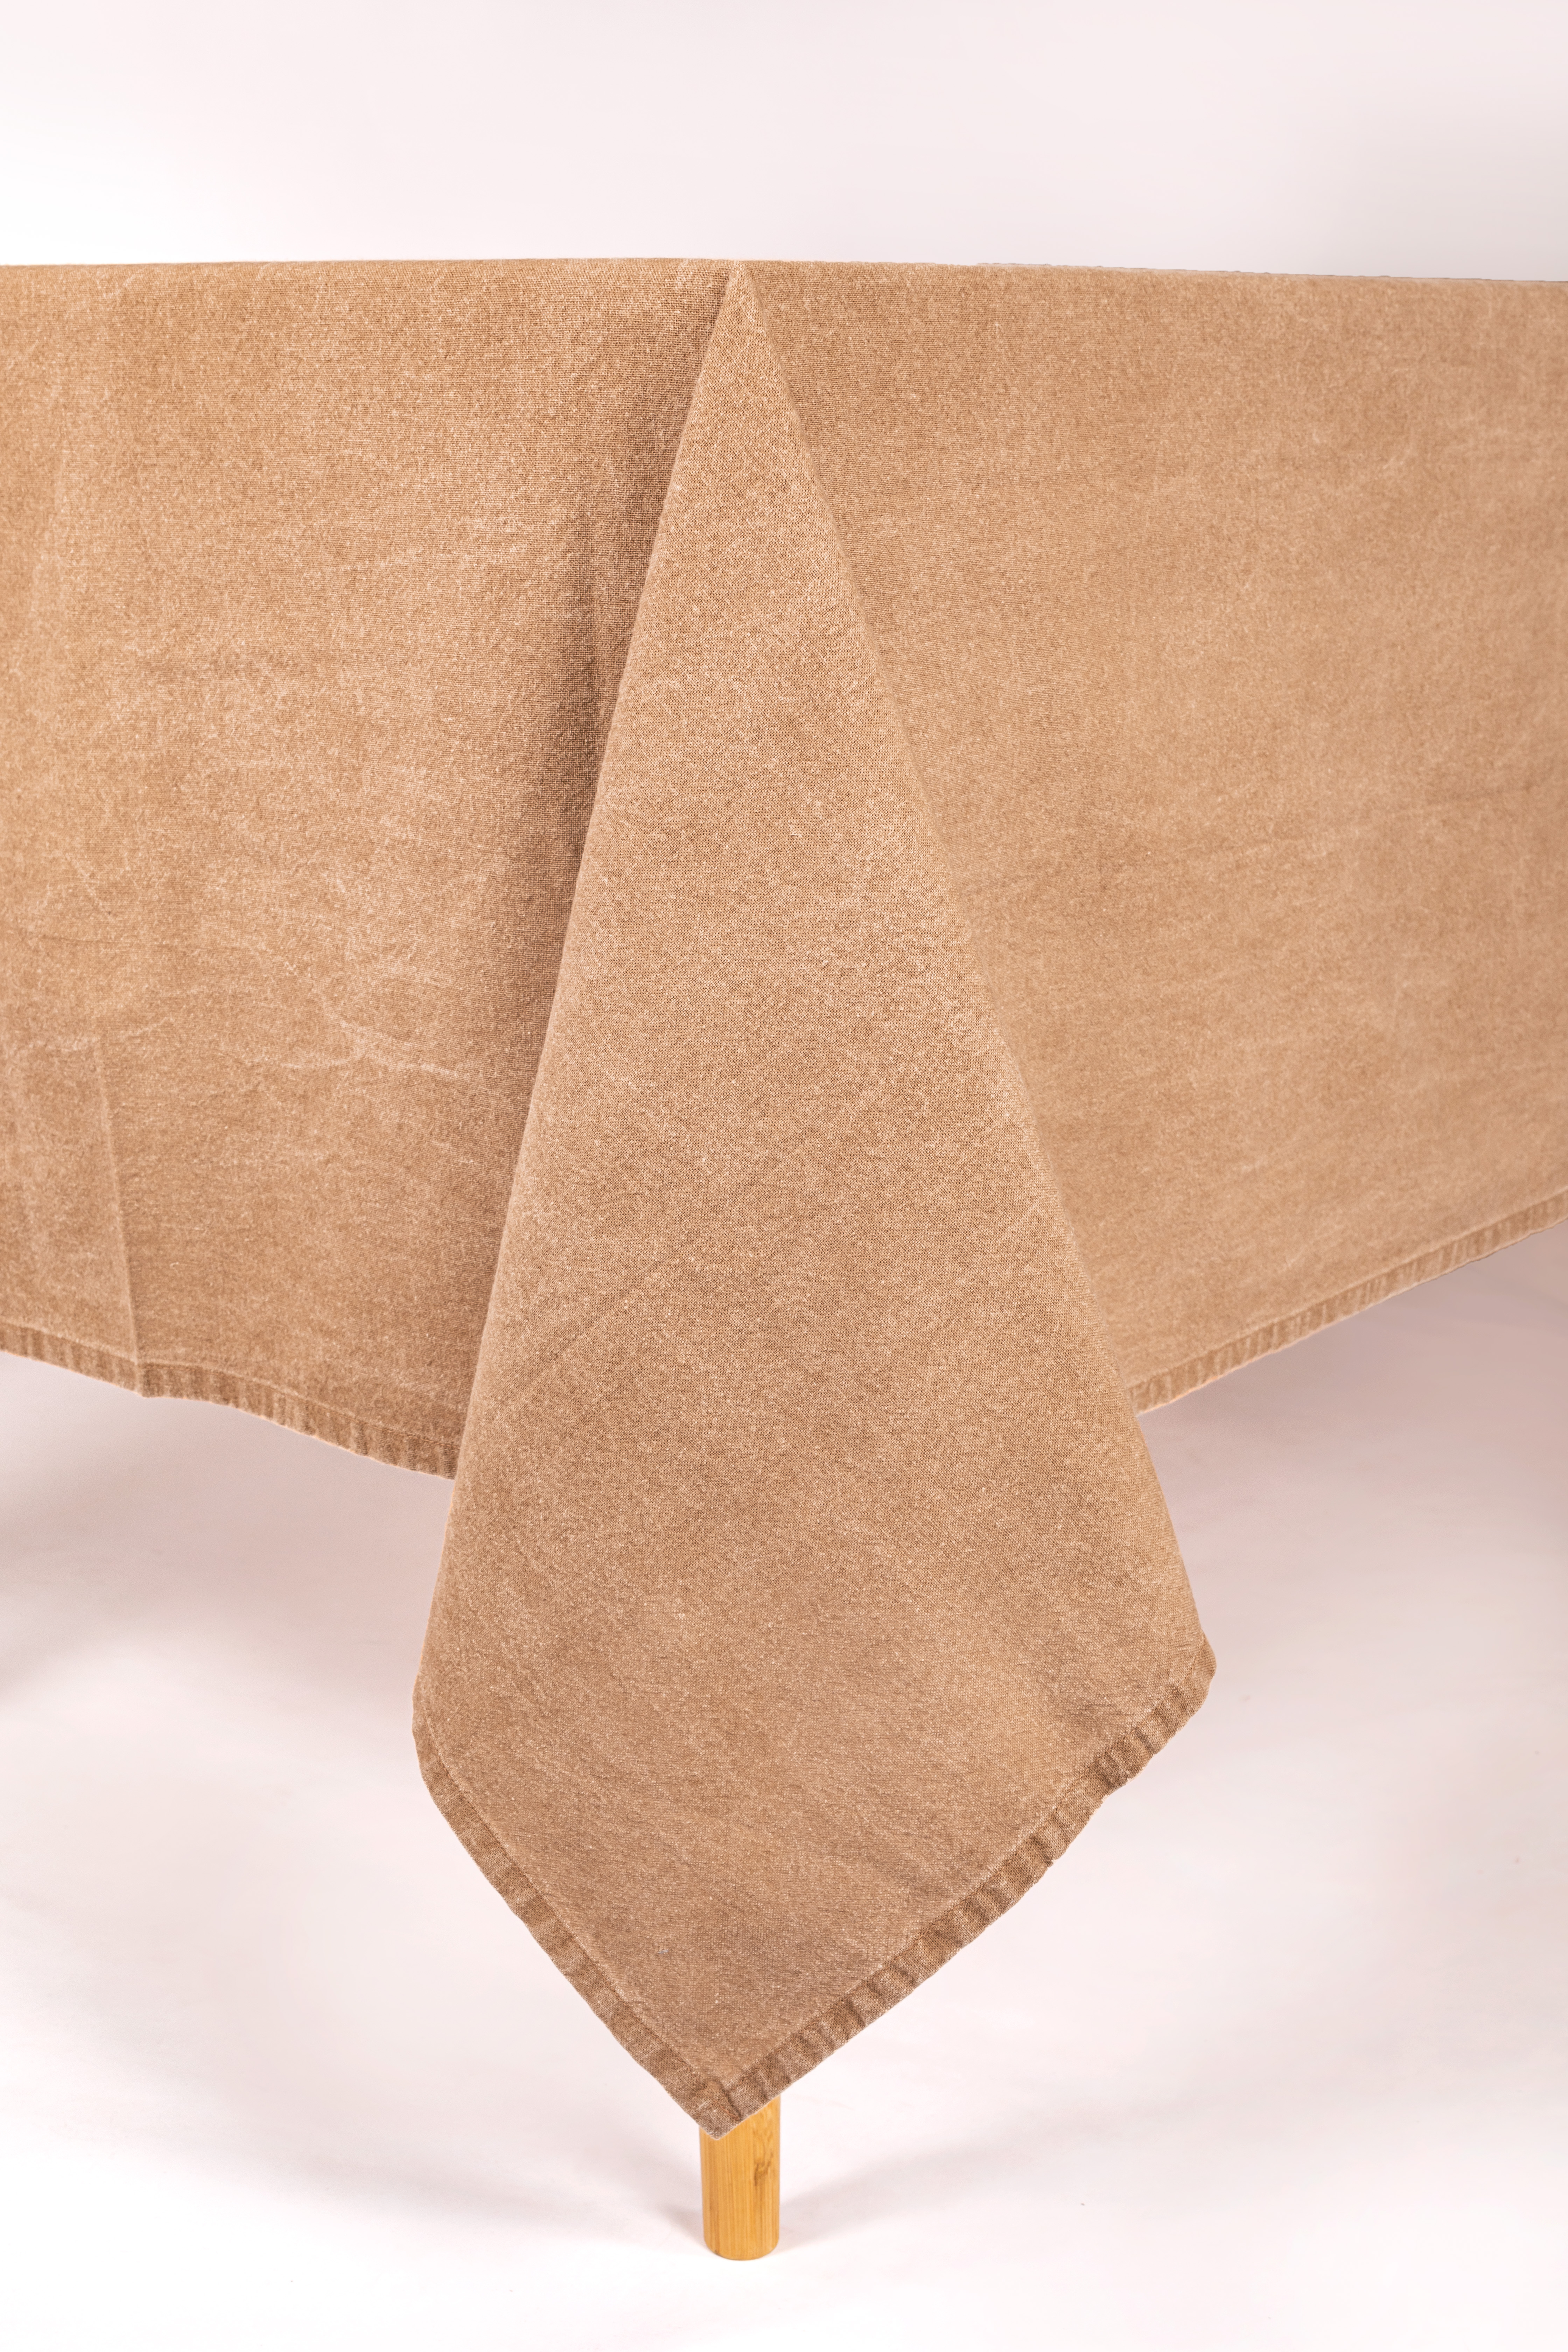 Table cloth MYRNA 145x300cm - indian tan